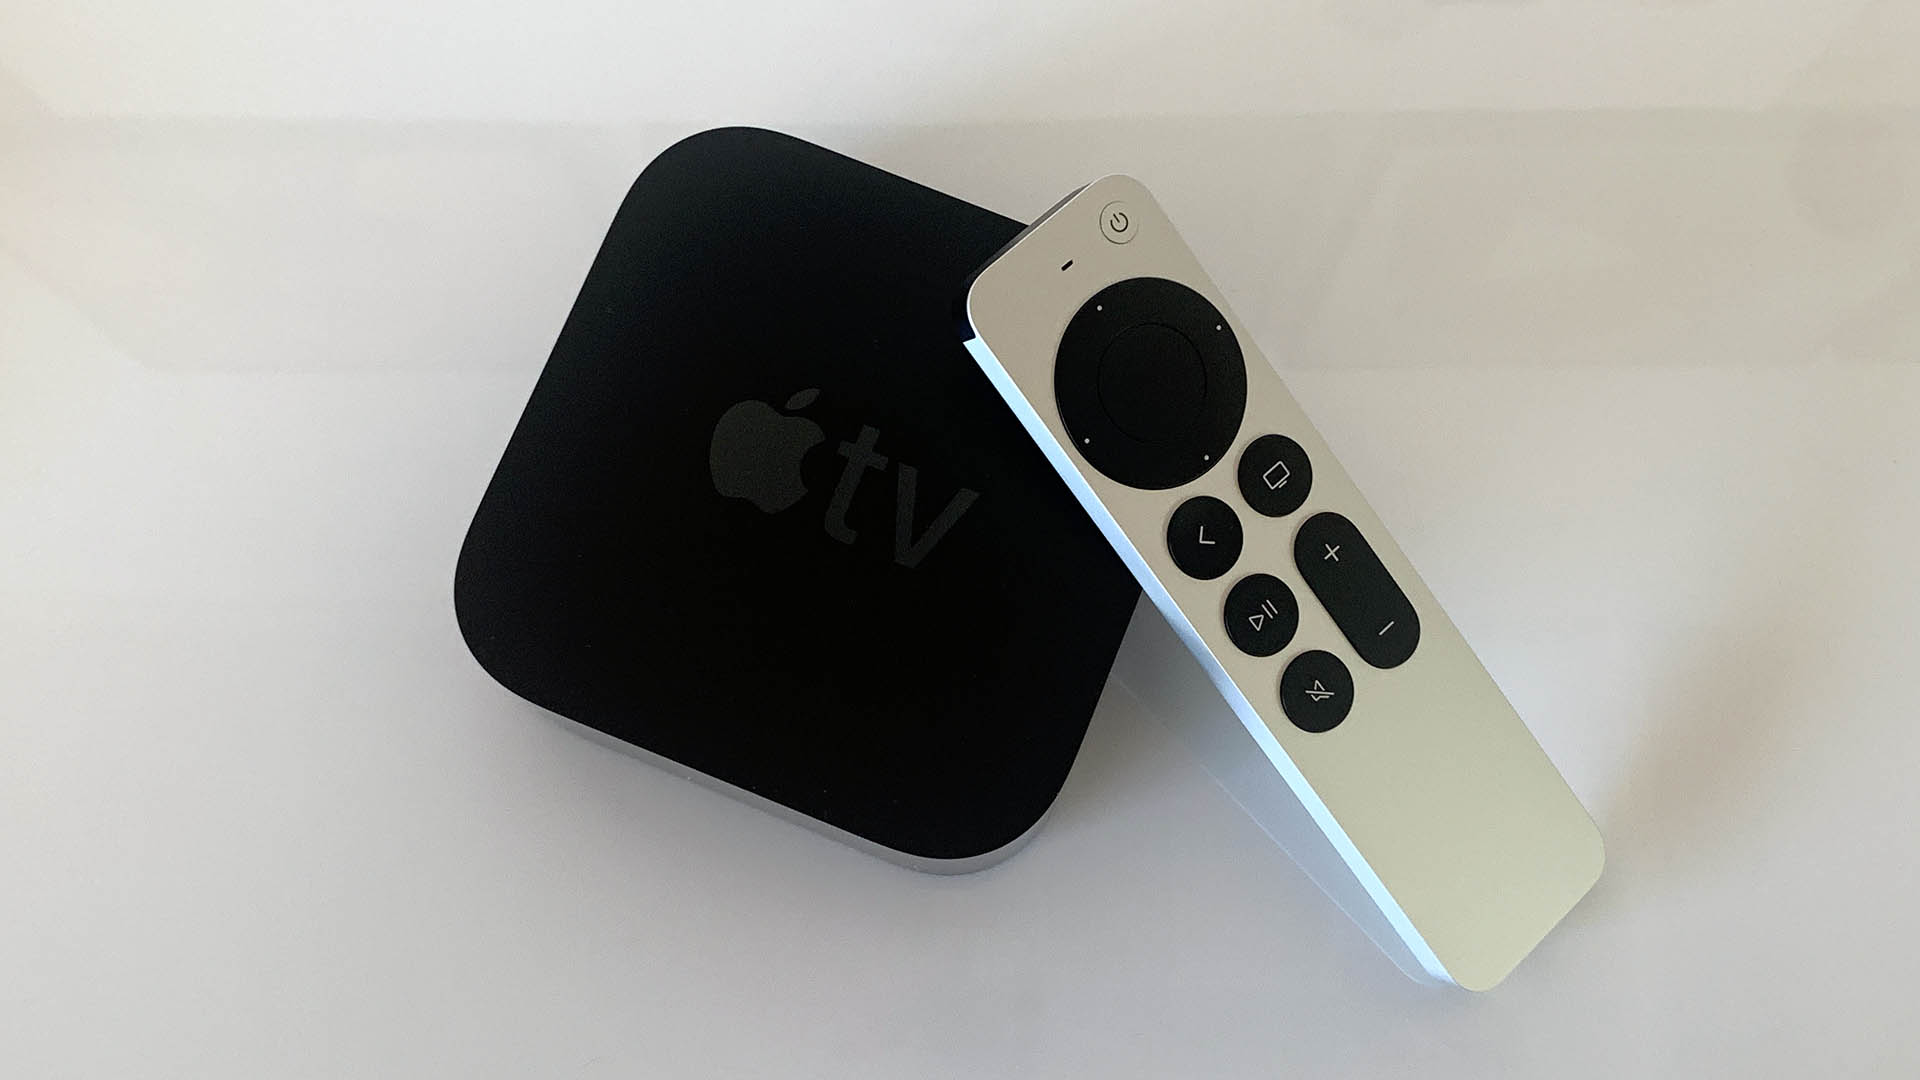 Apple TV 4k 2nd-Gen (2021) Hands On Review | HD Report